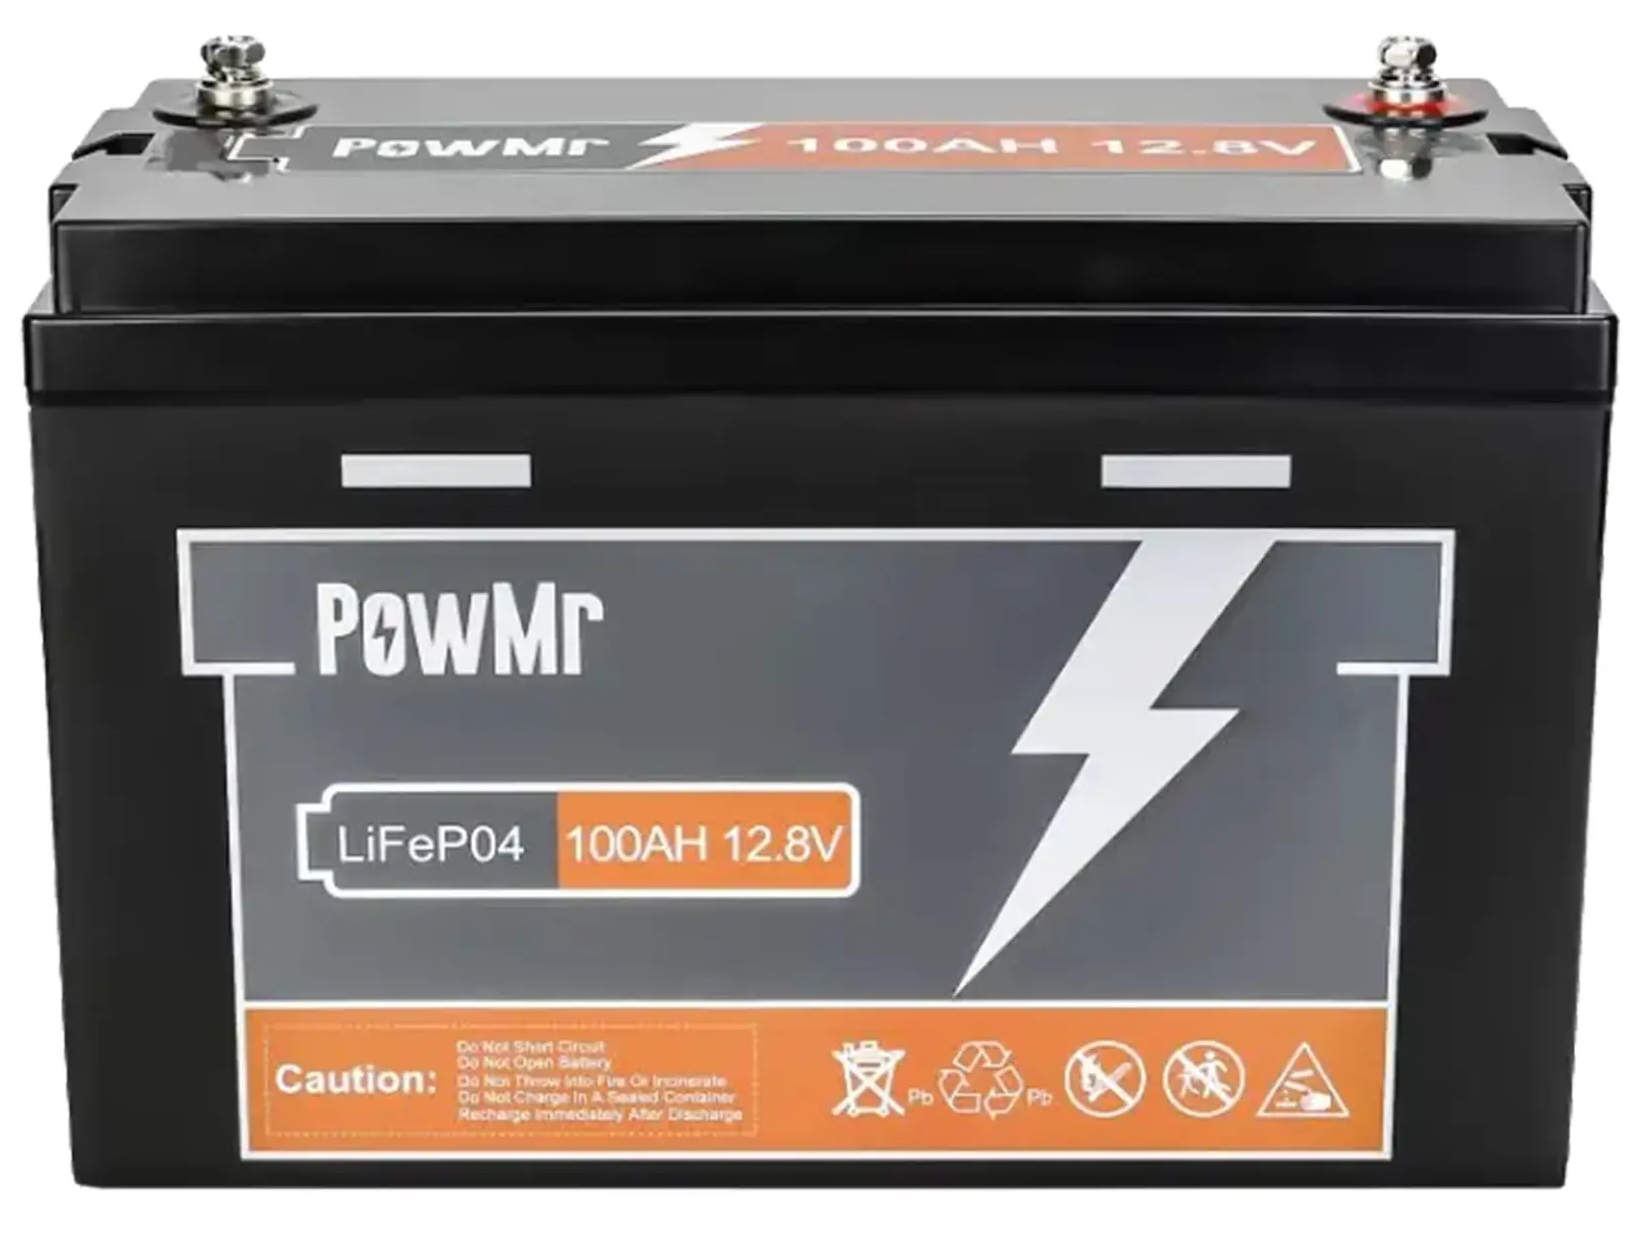 Характеристики акумуляторна батарея PowMr 12.8V 100Ah LiFePo4 (POW-100AH-12V)